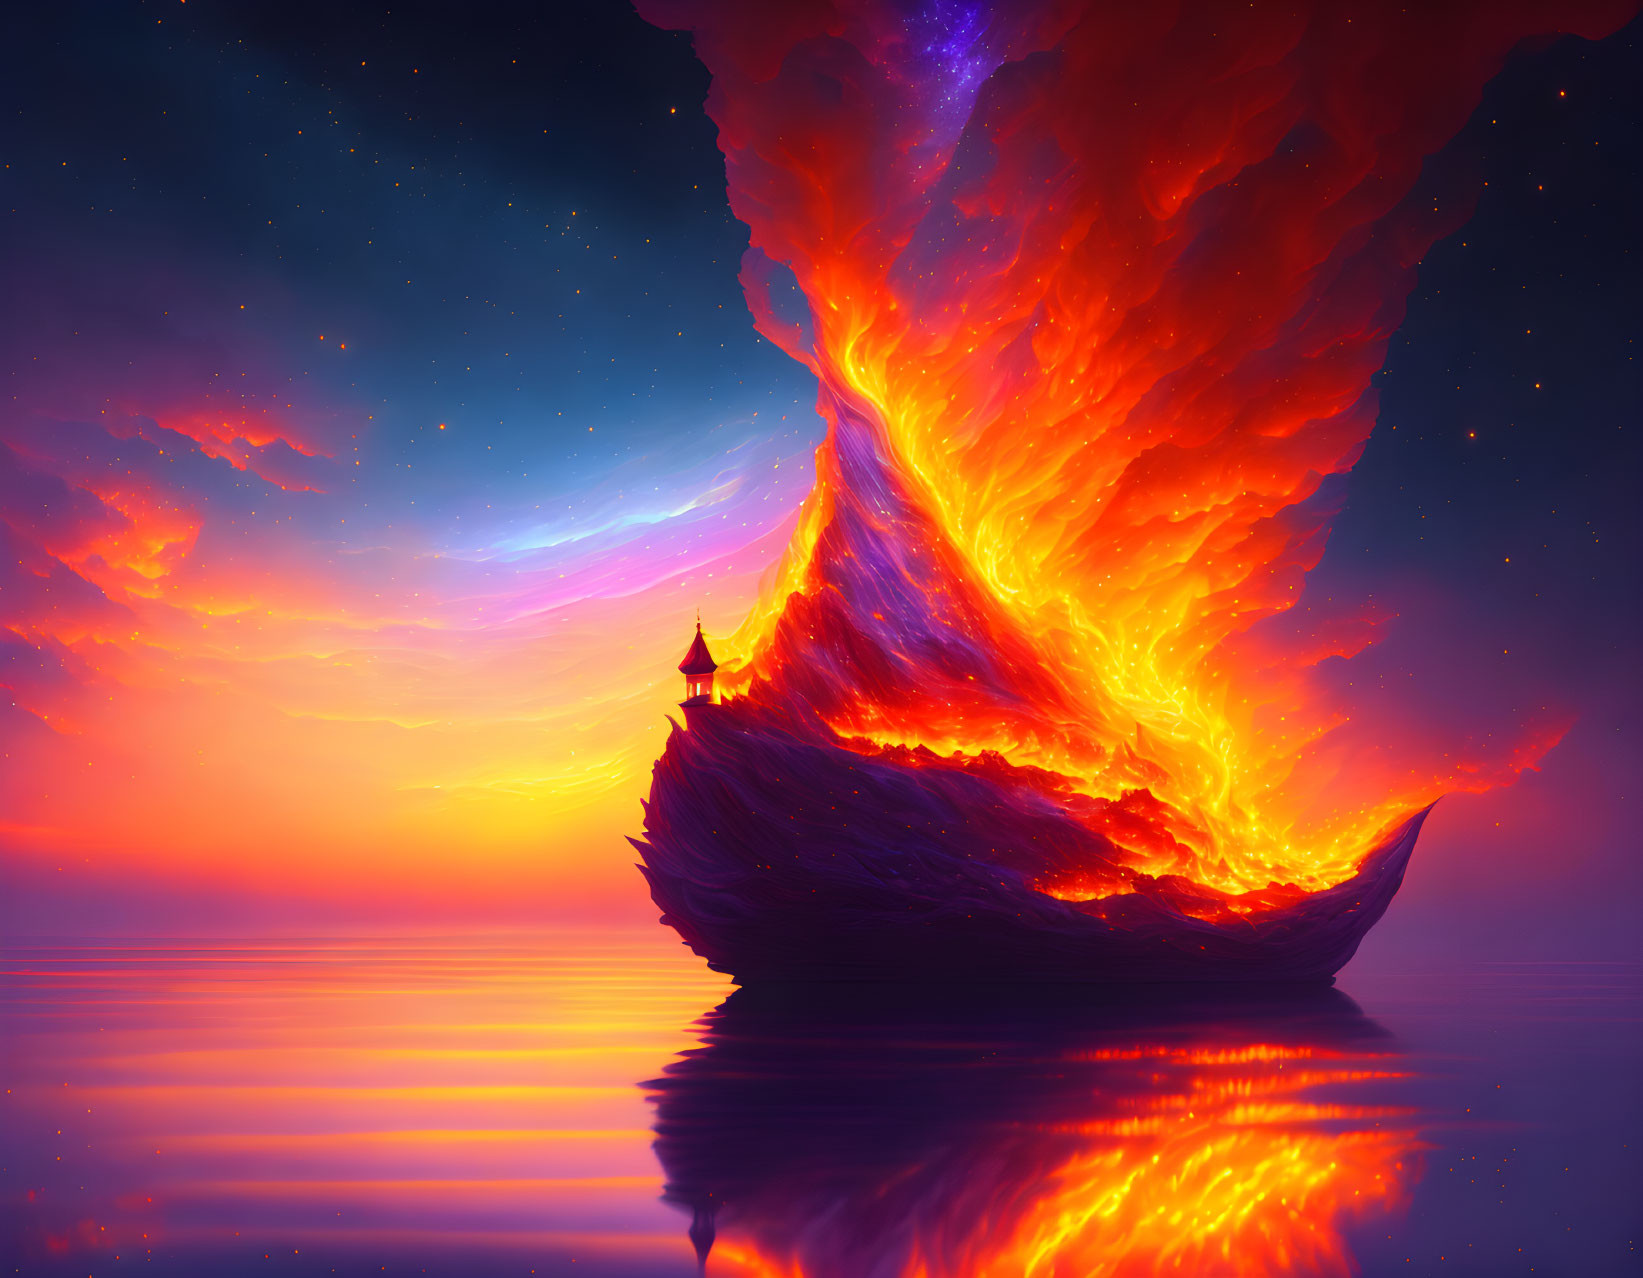 Colorful digital artwork: ship with fiery sails on calm sea, reflecting nebula-streaked sky